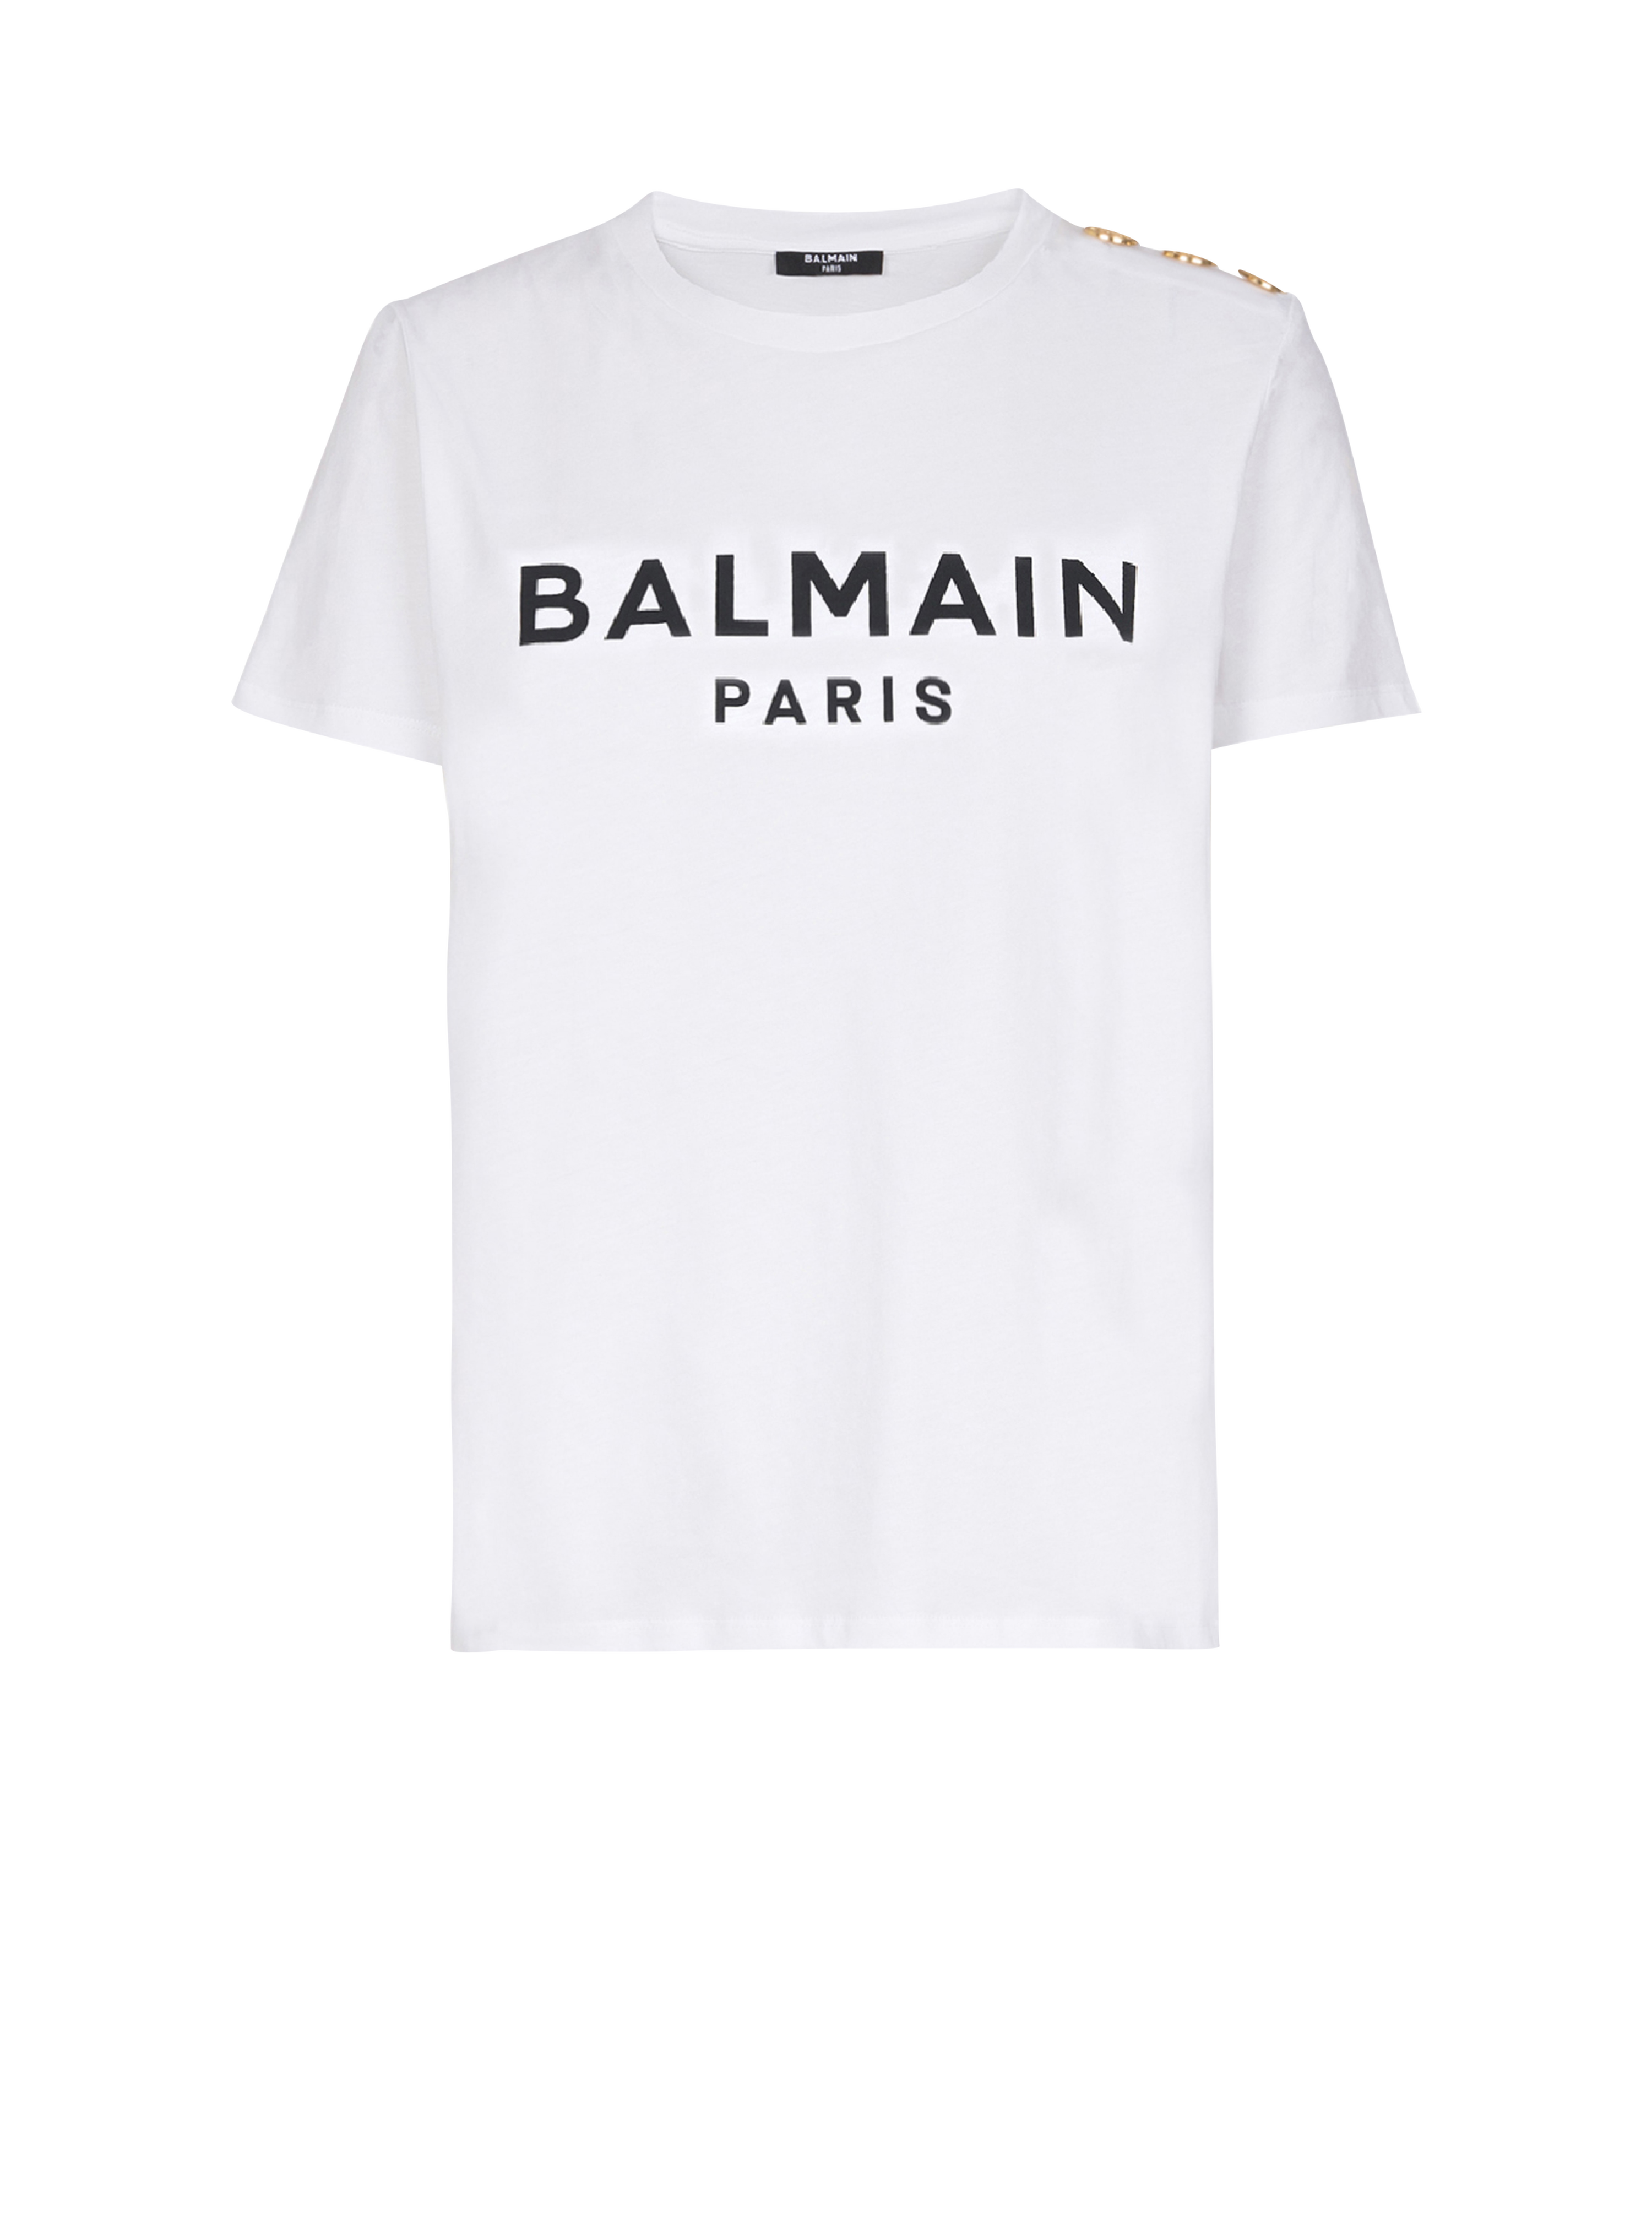 T-shirt in cotone con logo Balmain, bianco